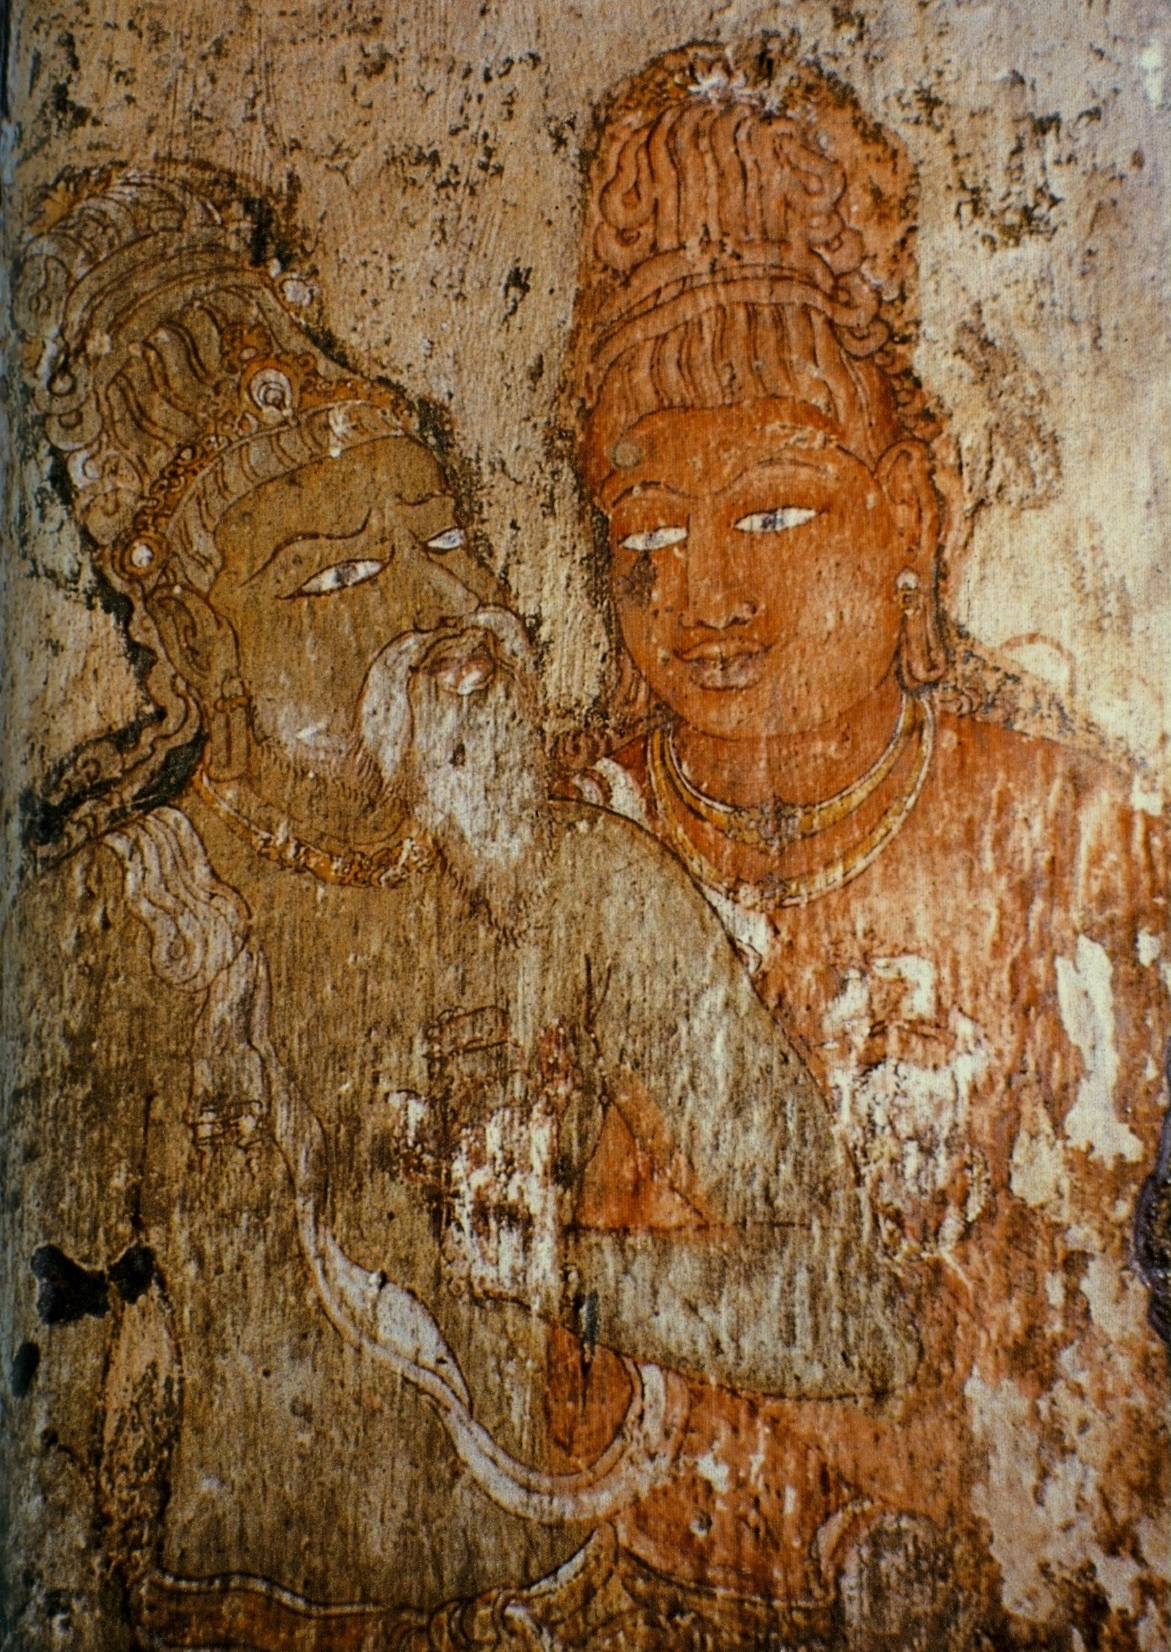 The Chola painting depicting Rajaraja Chola I with his guru, Karuvur Devar.